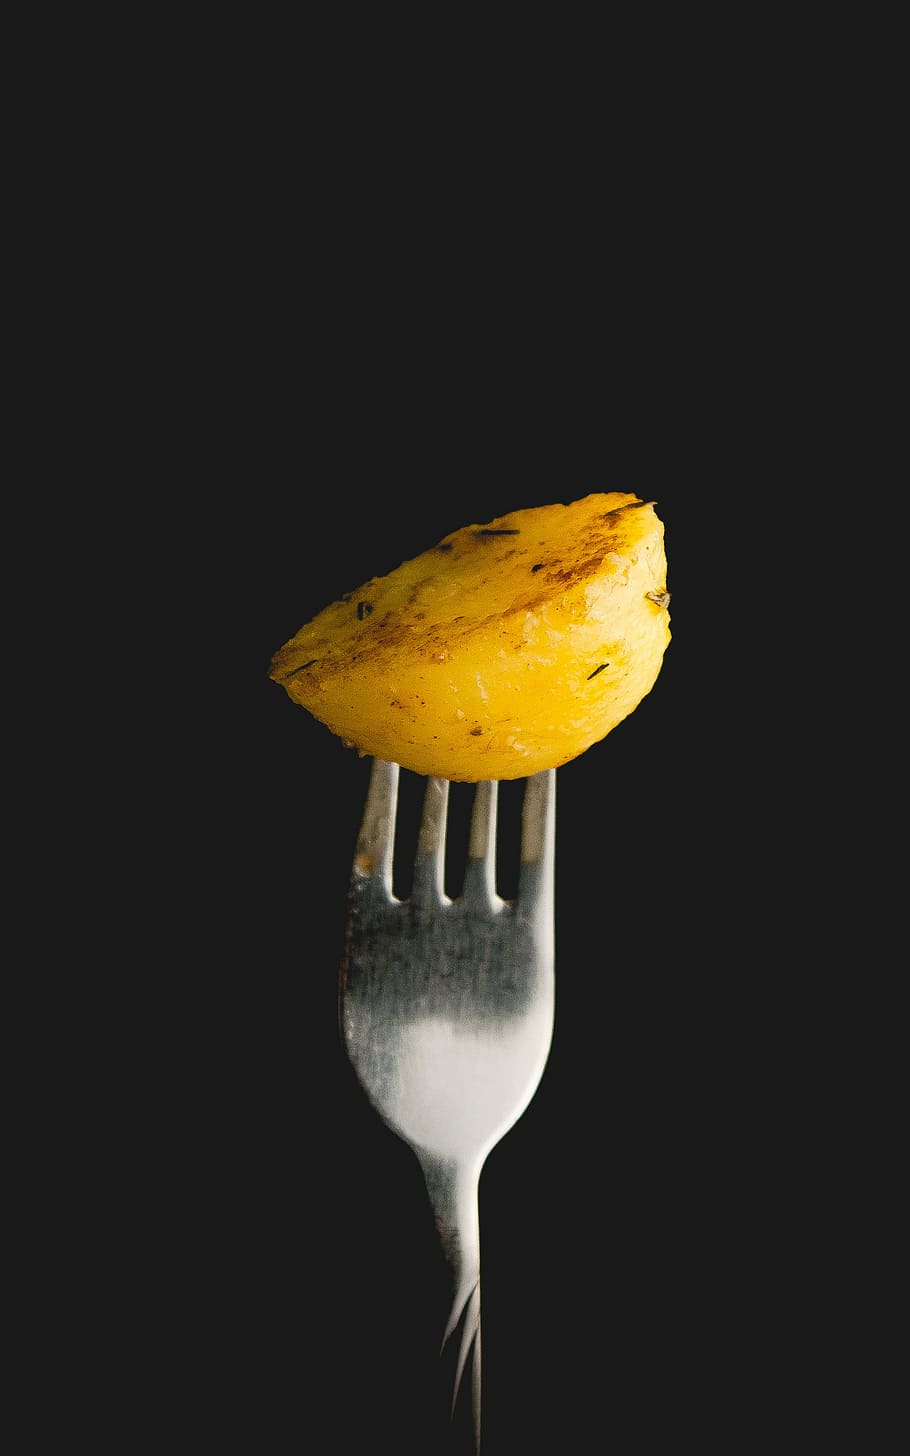 Potato, fork, fried, fried potato, grilled, minimalistic, simplistic, food, yellow, freshness